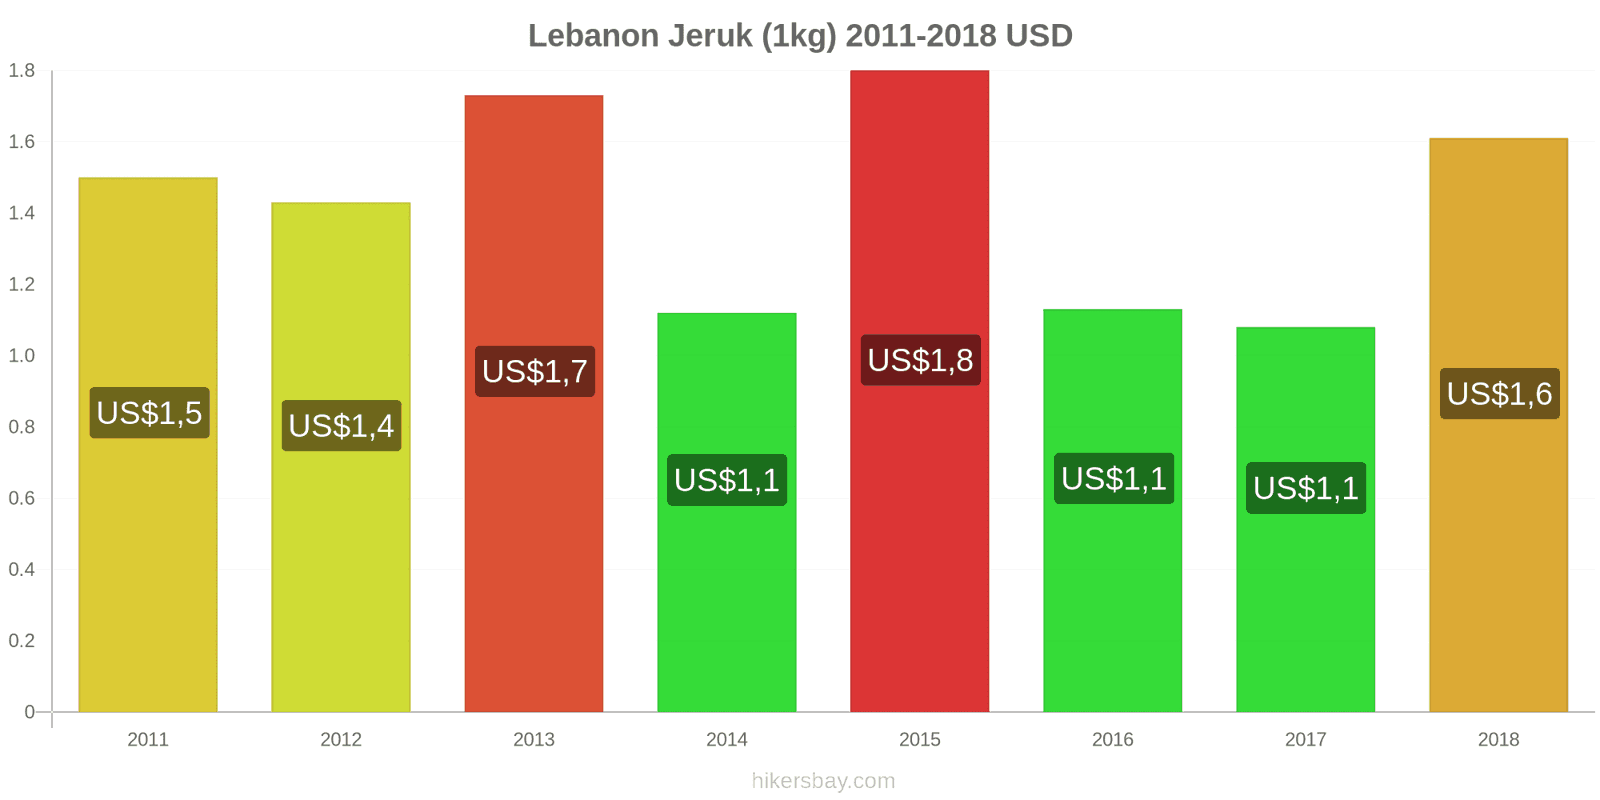 Lebanon perubahan harga Jeruk (1kg) hikersbay.com